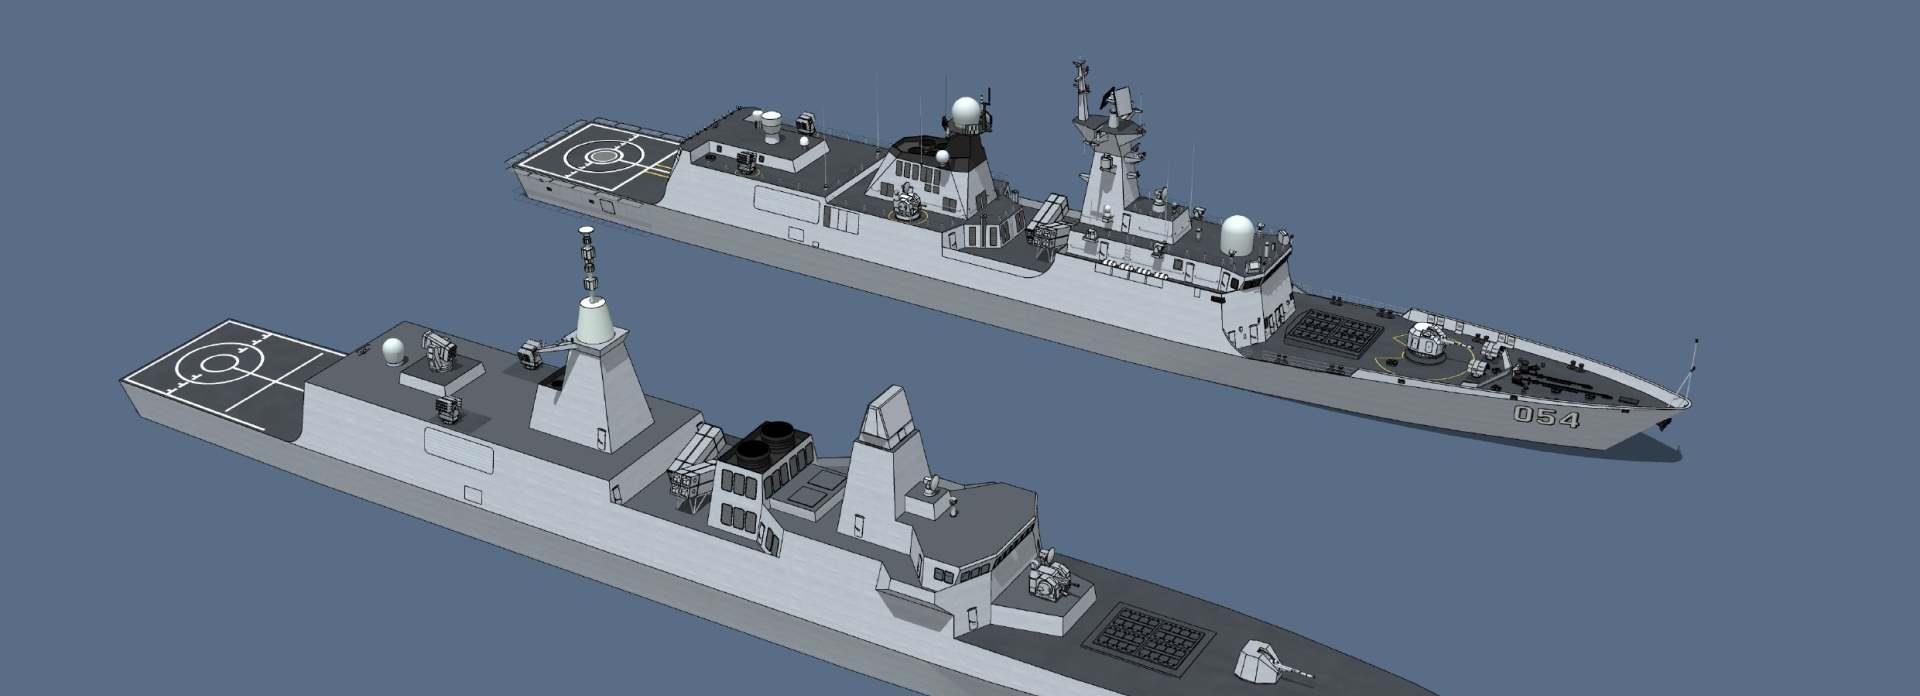 054b护卫舰将在5月开建满排超五千吨全电推进双面旋转小盾